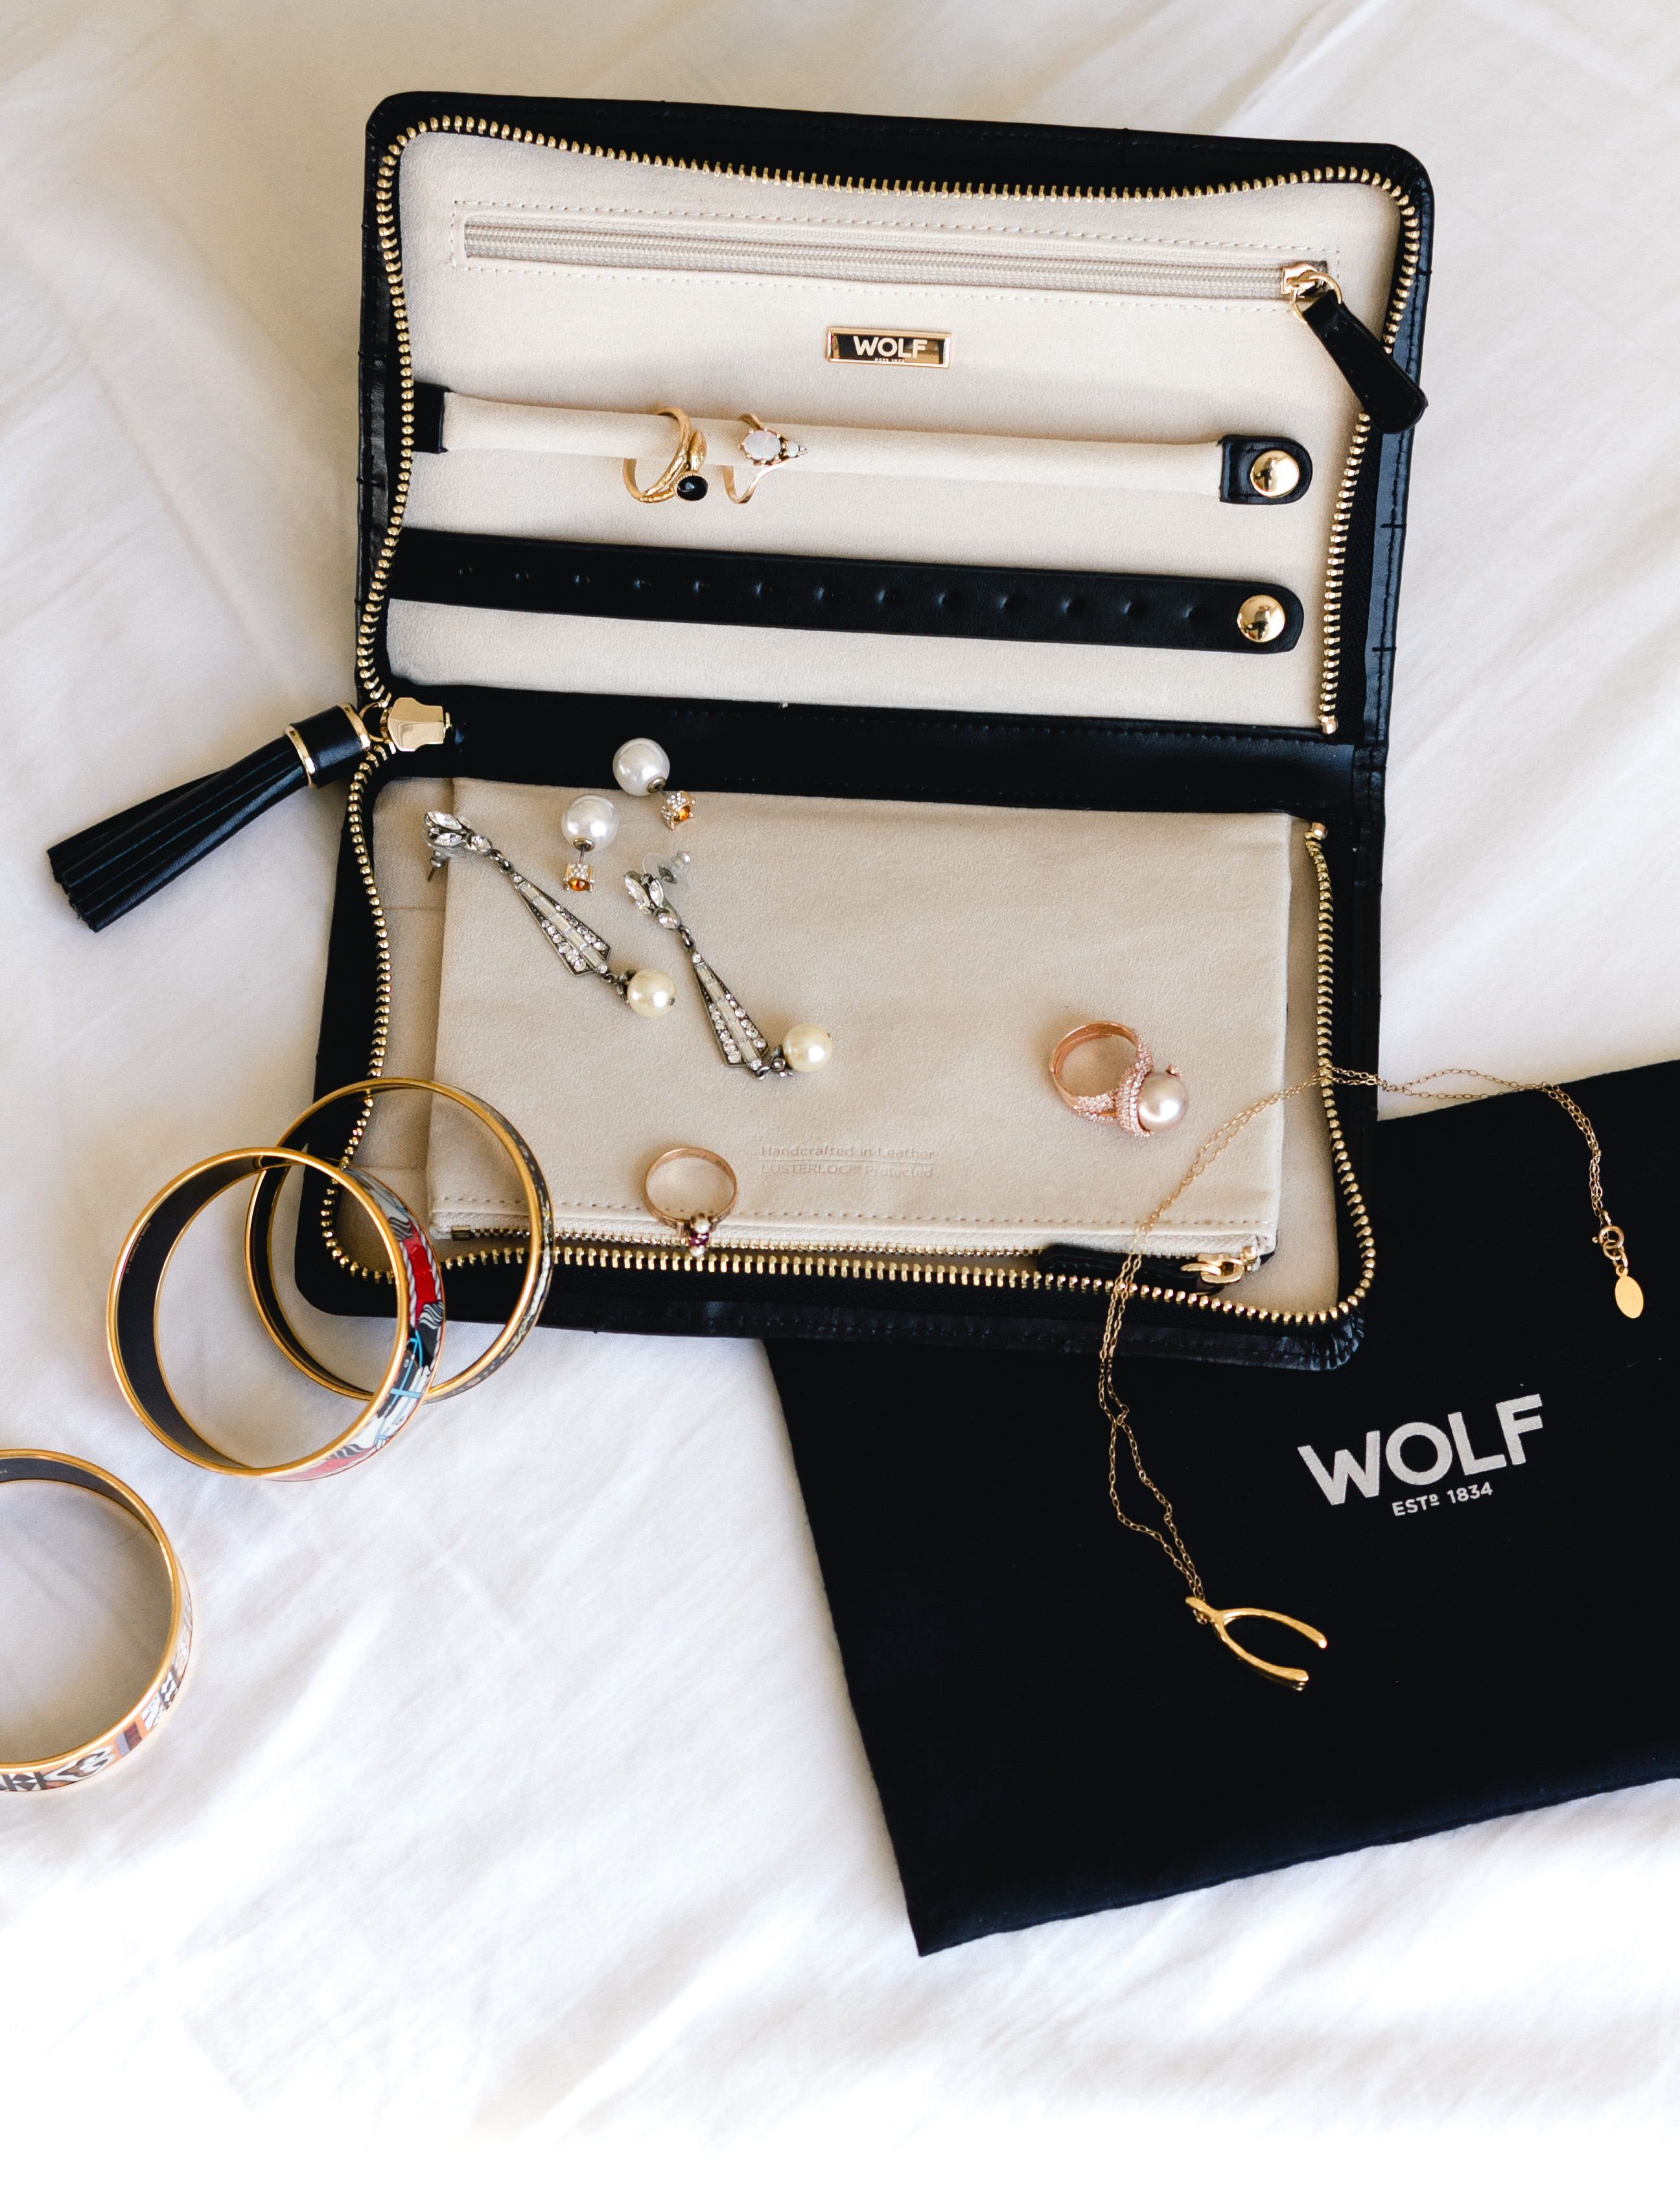 Wolf jewelry box